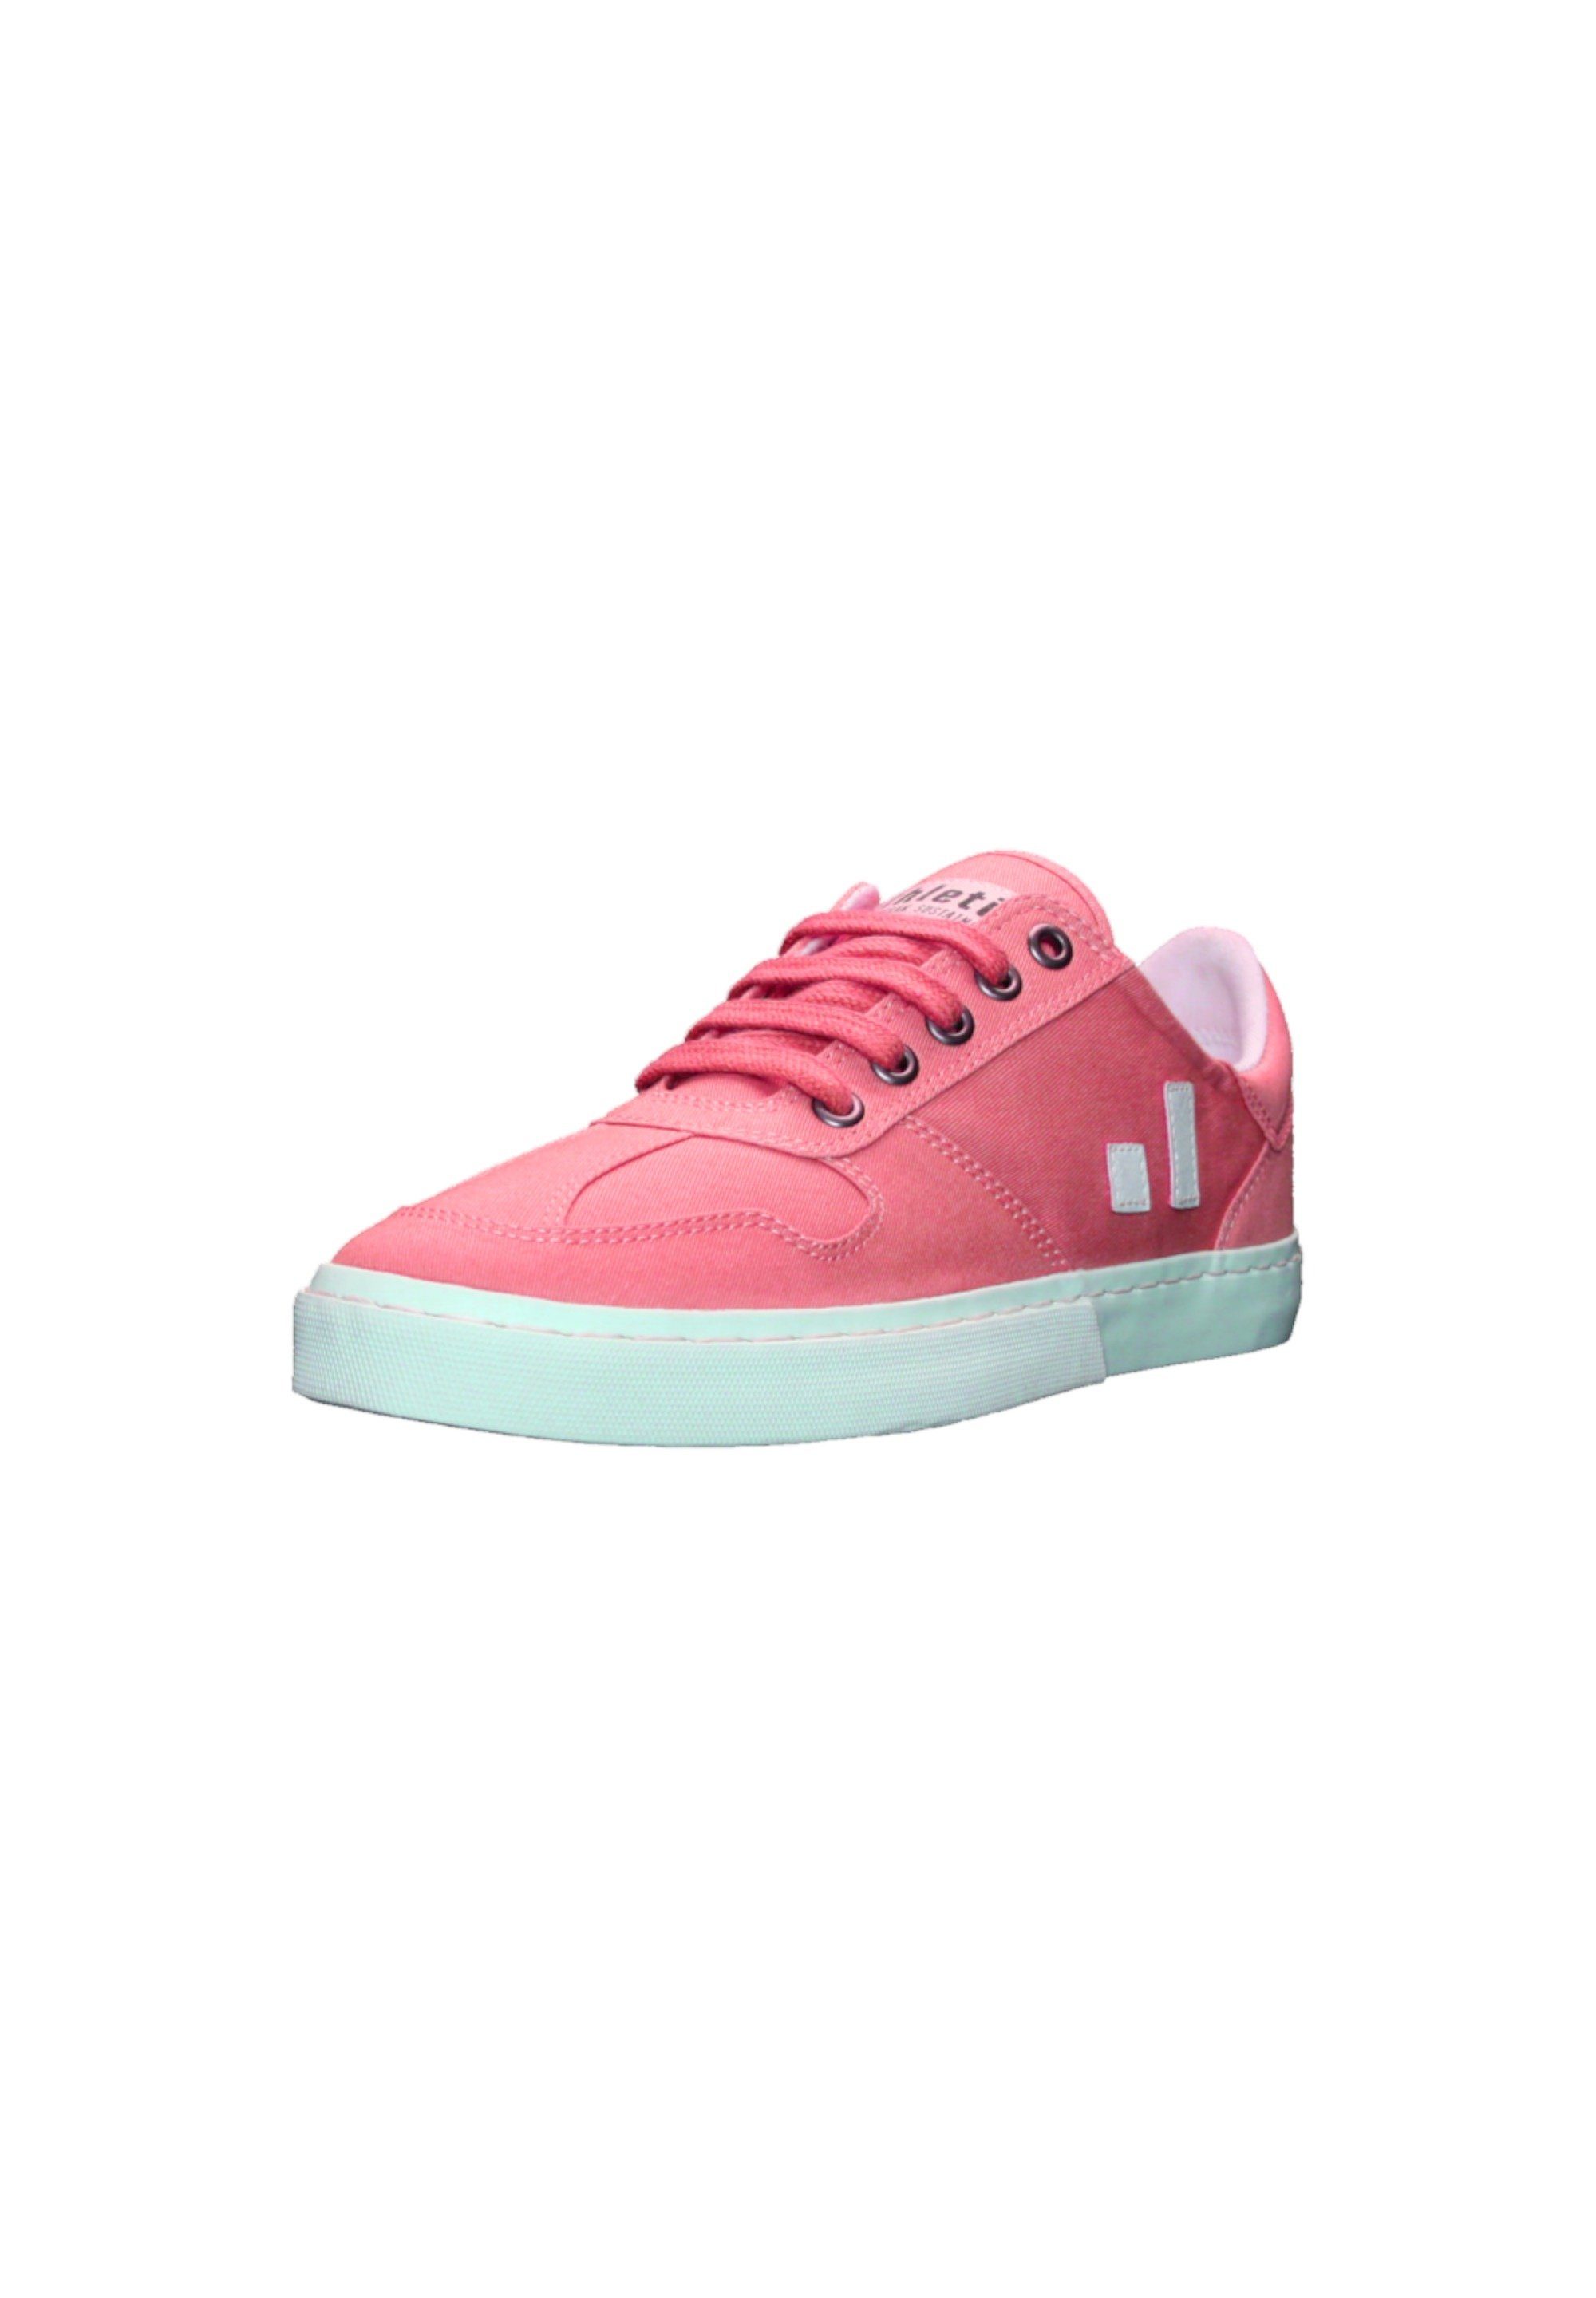 Strawberry Sneaker Fairtrade ETHLETIC II Pink Produkt P Root